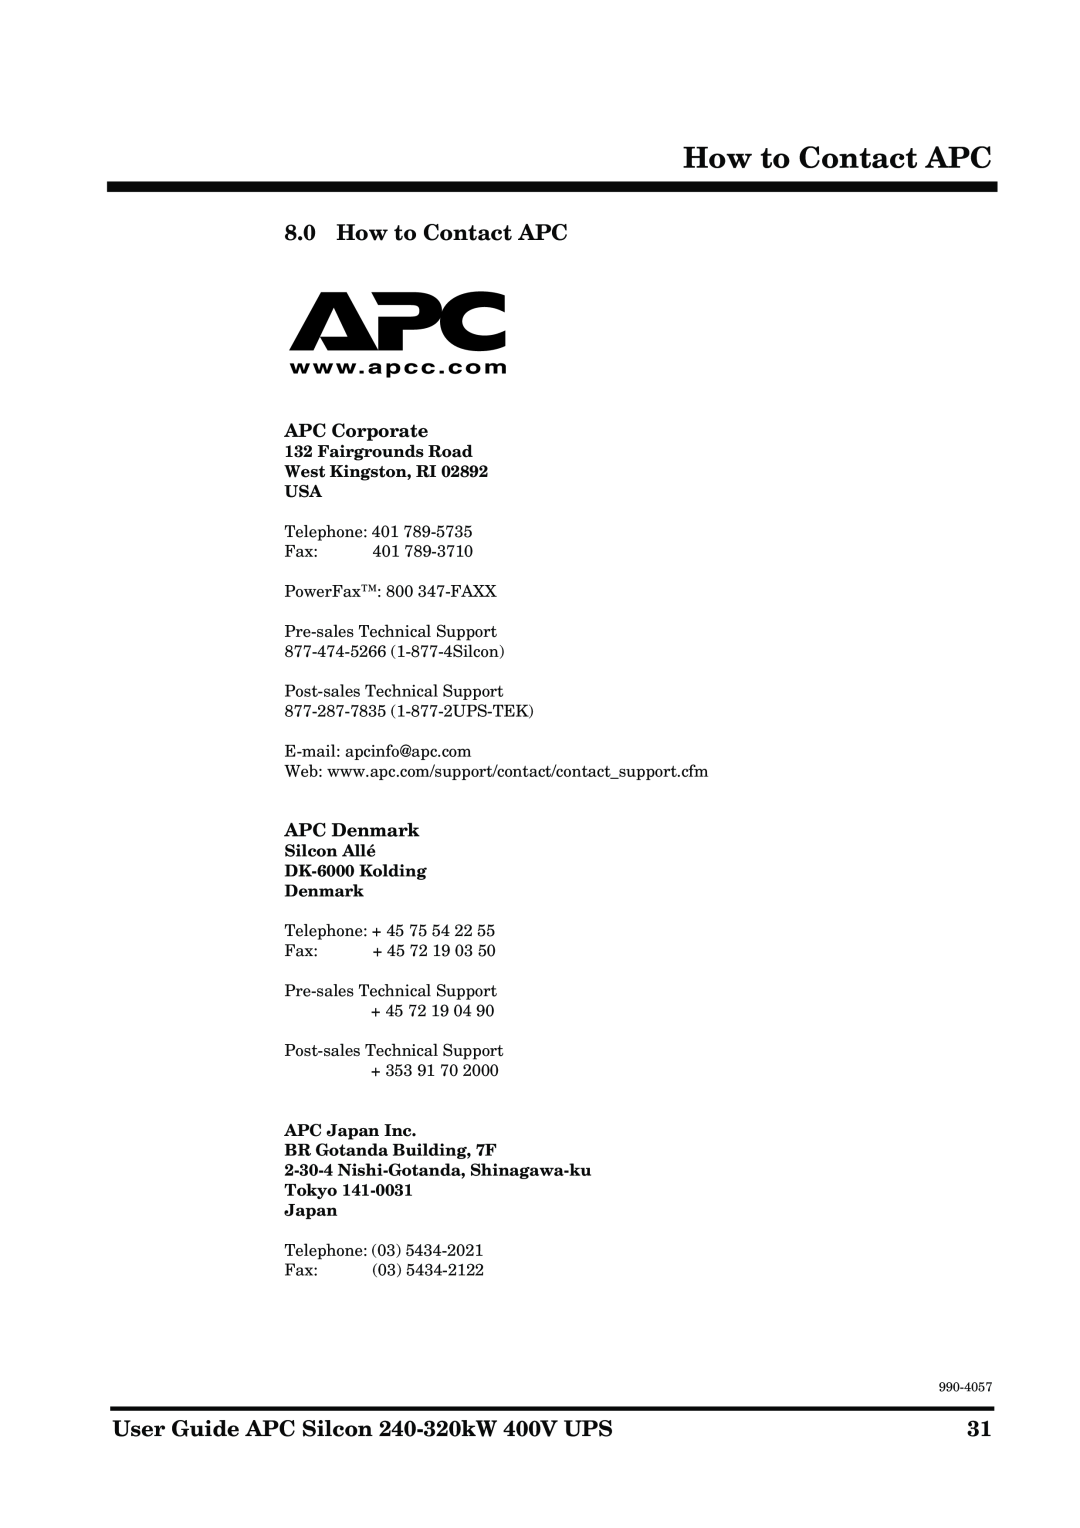 American Power Conversion 240-320kW400V manual How to Contact APC, APC Corporate, APC Denmark 